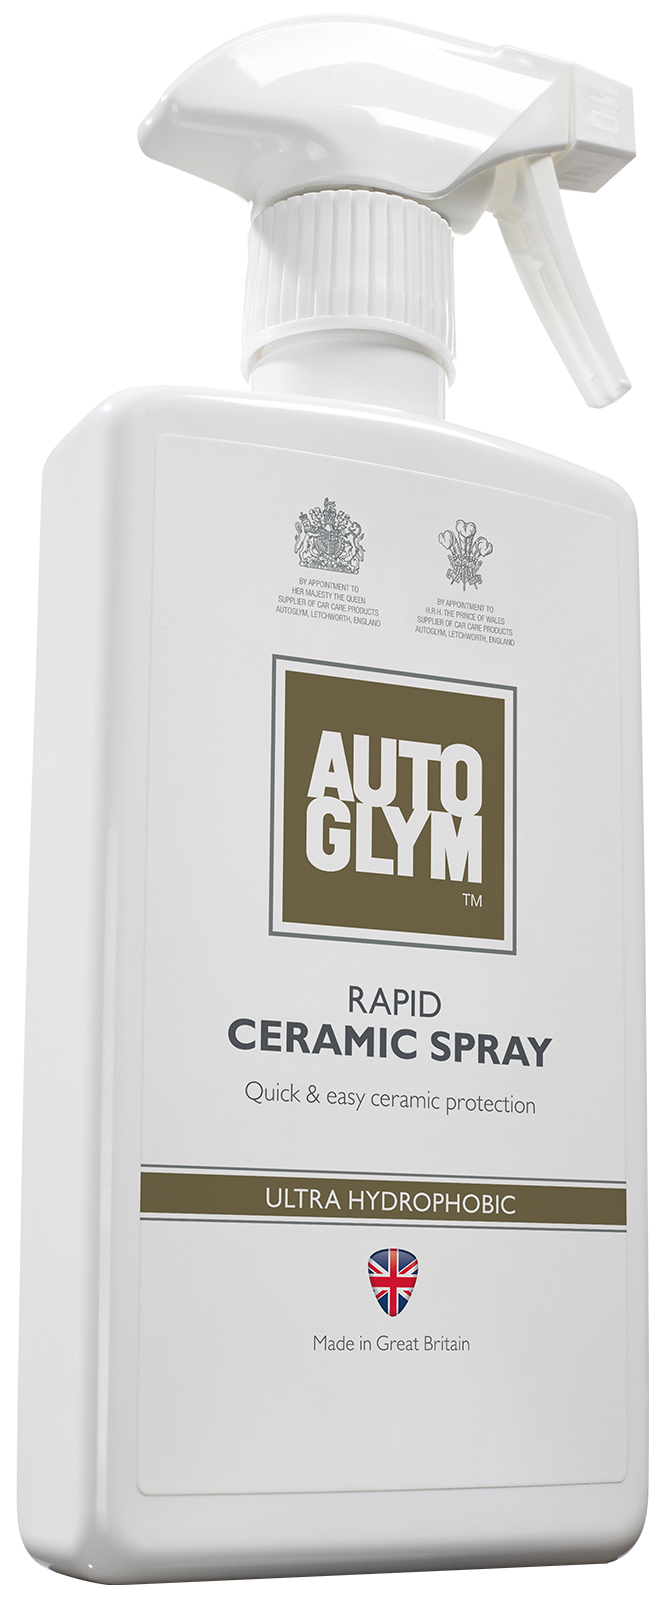 Auto Glym - Rapid Ceramic Spray